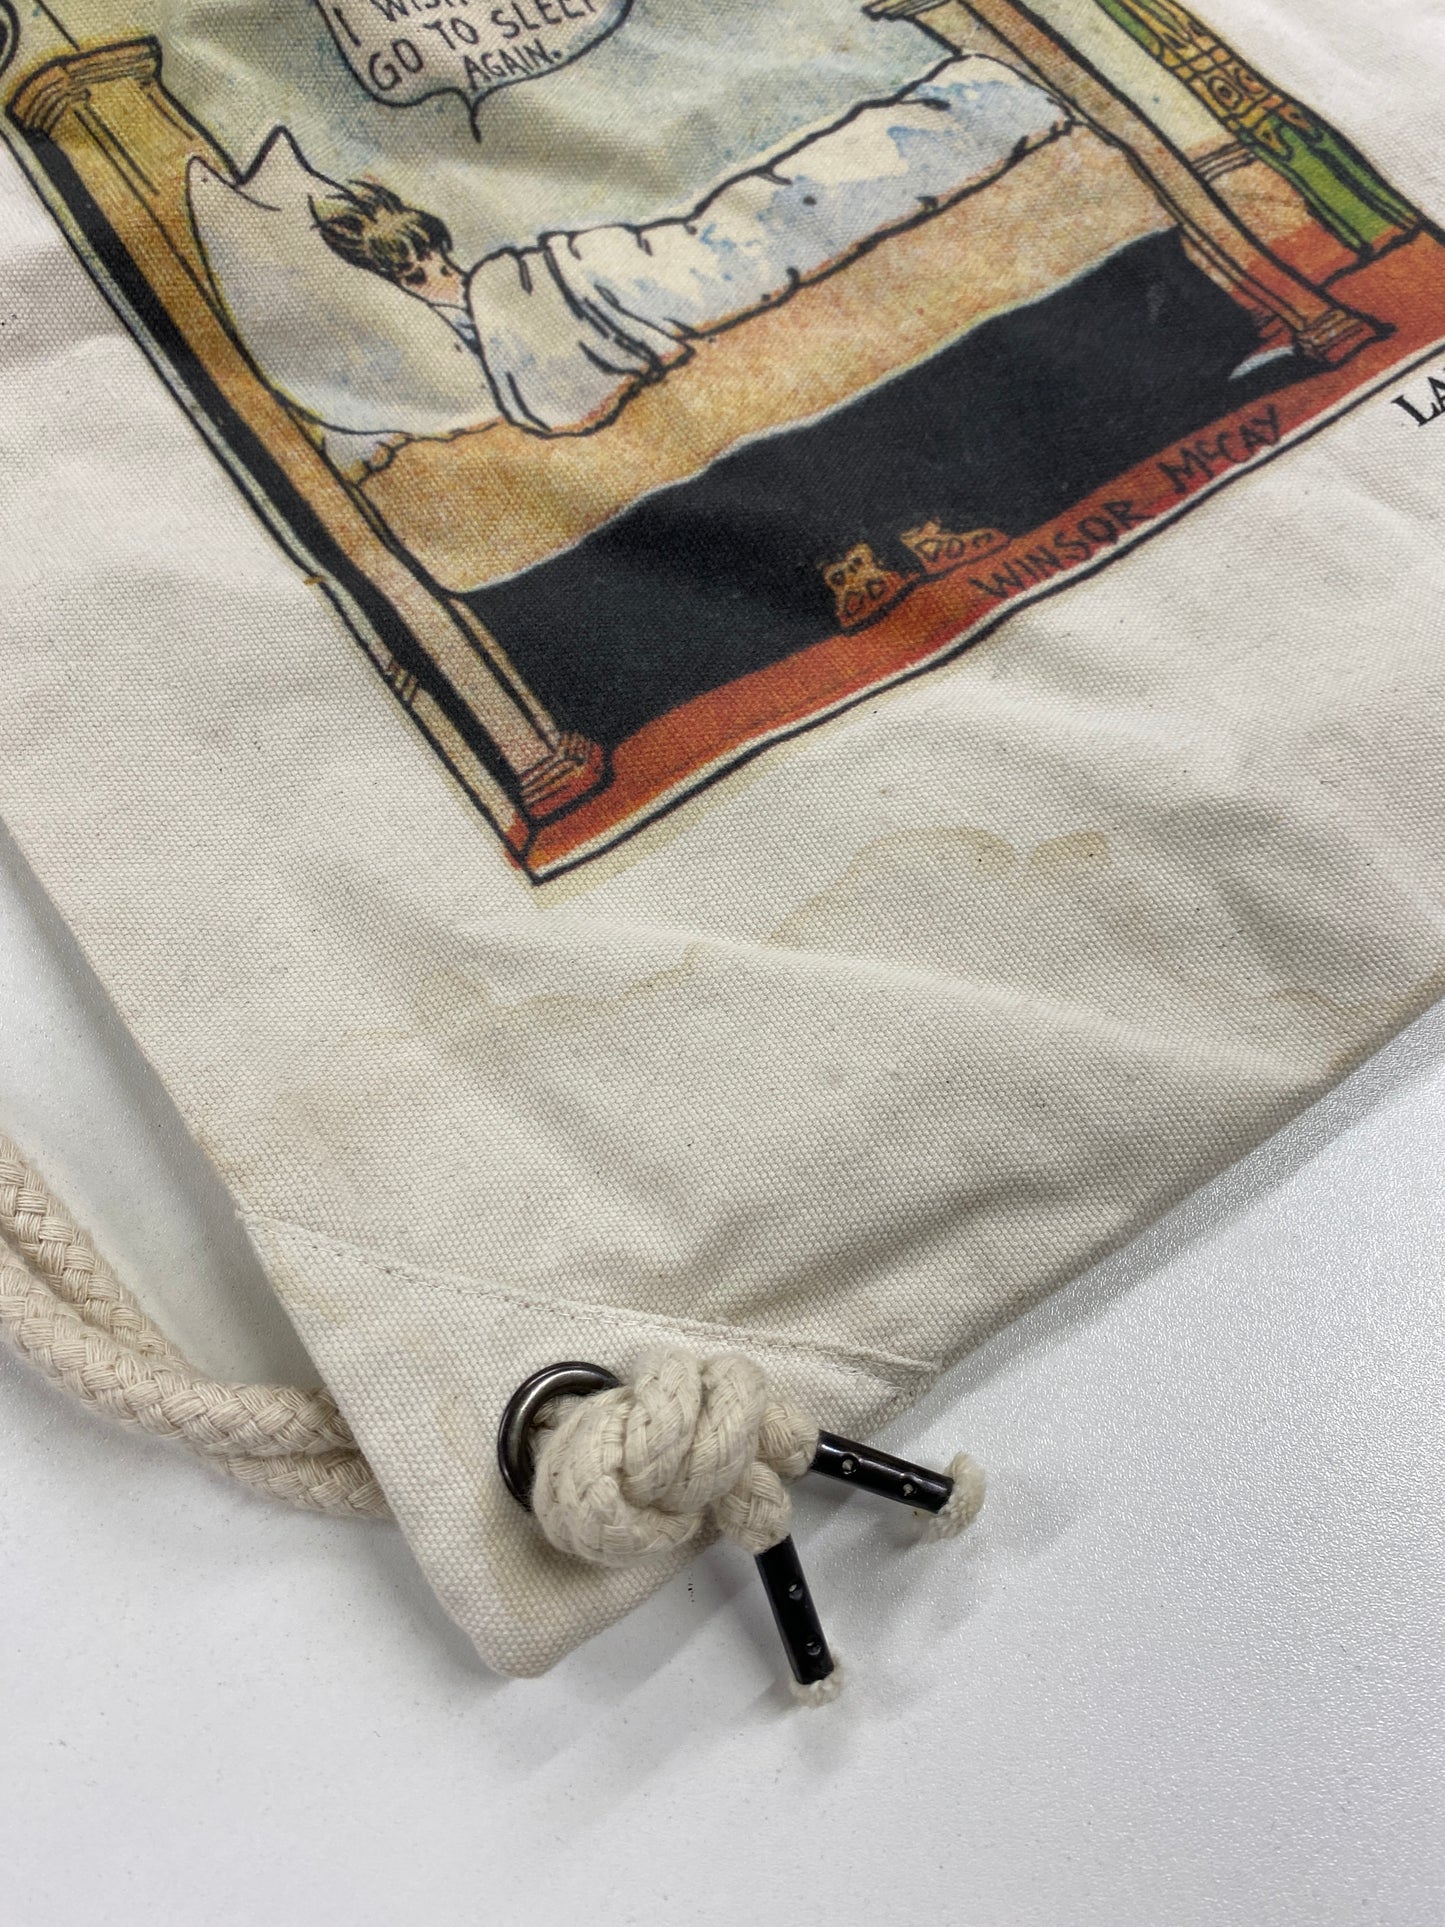 Lanvin x Winsor McCay Cream Cotton Recycled Drawstring Gym Bag